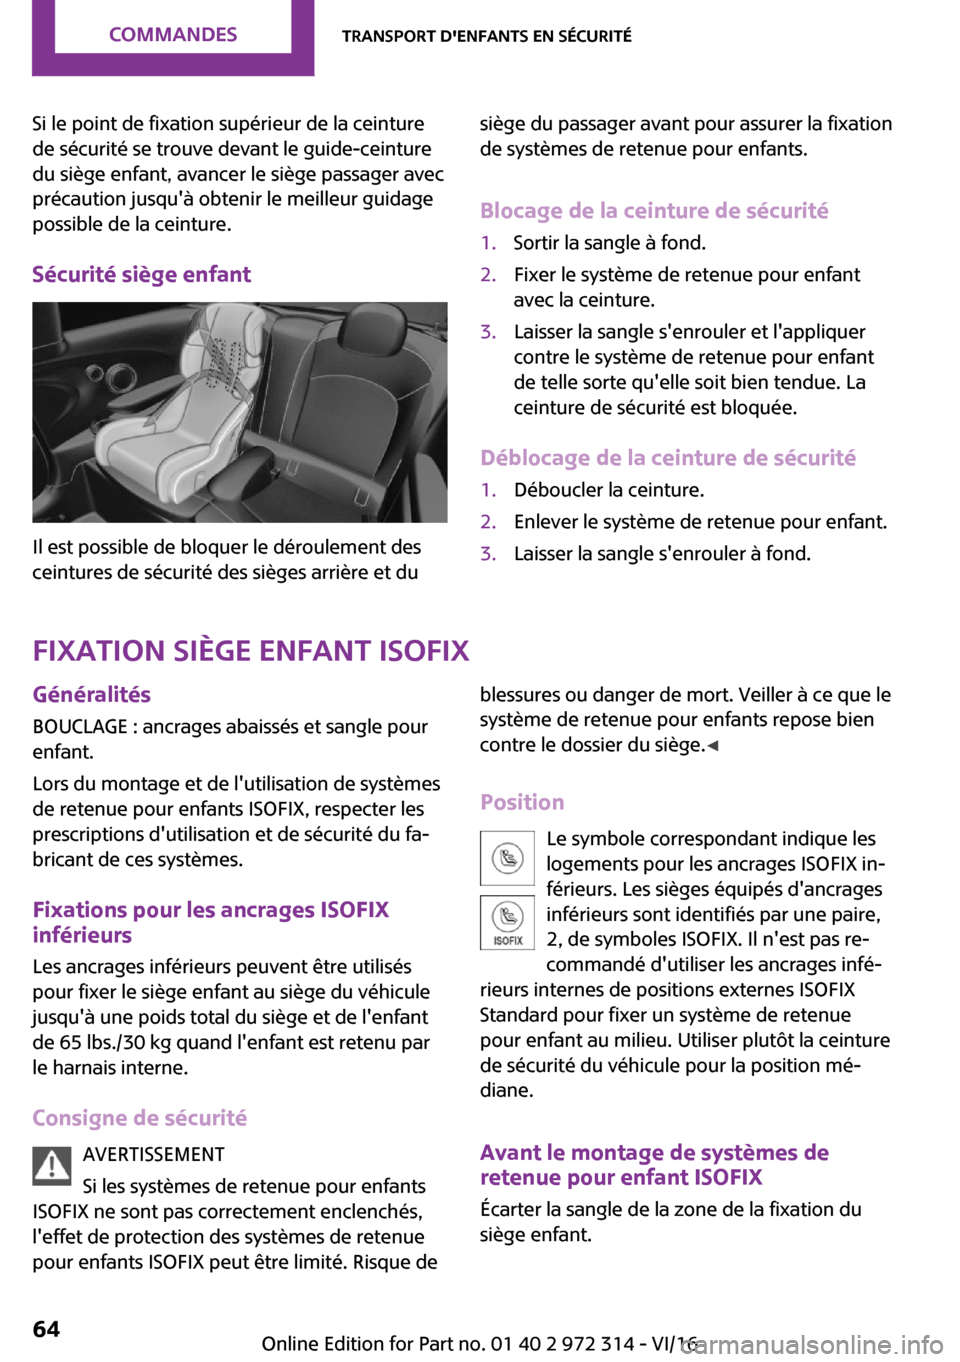 MINI 3 door 2016  Manuel du propriétaire (in French) �S�i� �l�e� �p�o�i�n�t� �d�e� �f�i�x�a�t�i�o�n� �s�u�p�é�r�i�e�u�r� �d�e� �l�a� �c�e�i�n�t�u�r�e
�d�e� �s�é�c�u�r�i�t�é� �s�e� �t�r�o�u�v�e� �d�e�v�a�n�t� �l�e� �g�u�i�d�e�-�c�e�i�n�t�u�r�e
�d�u� �